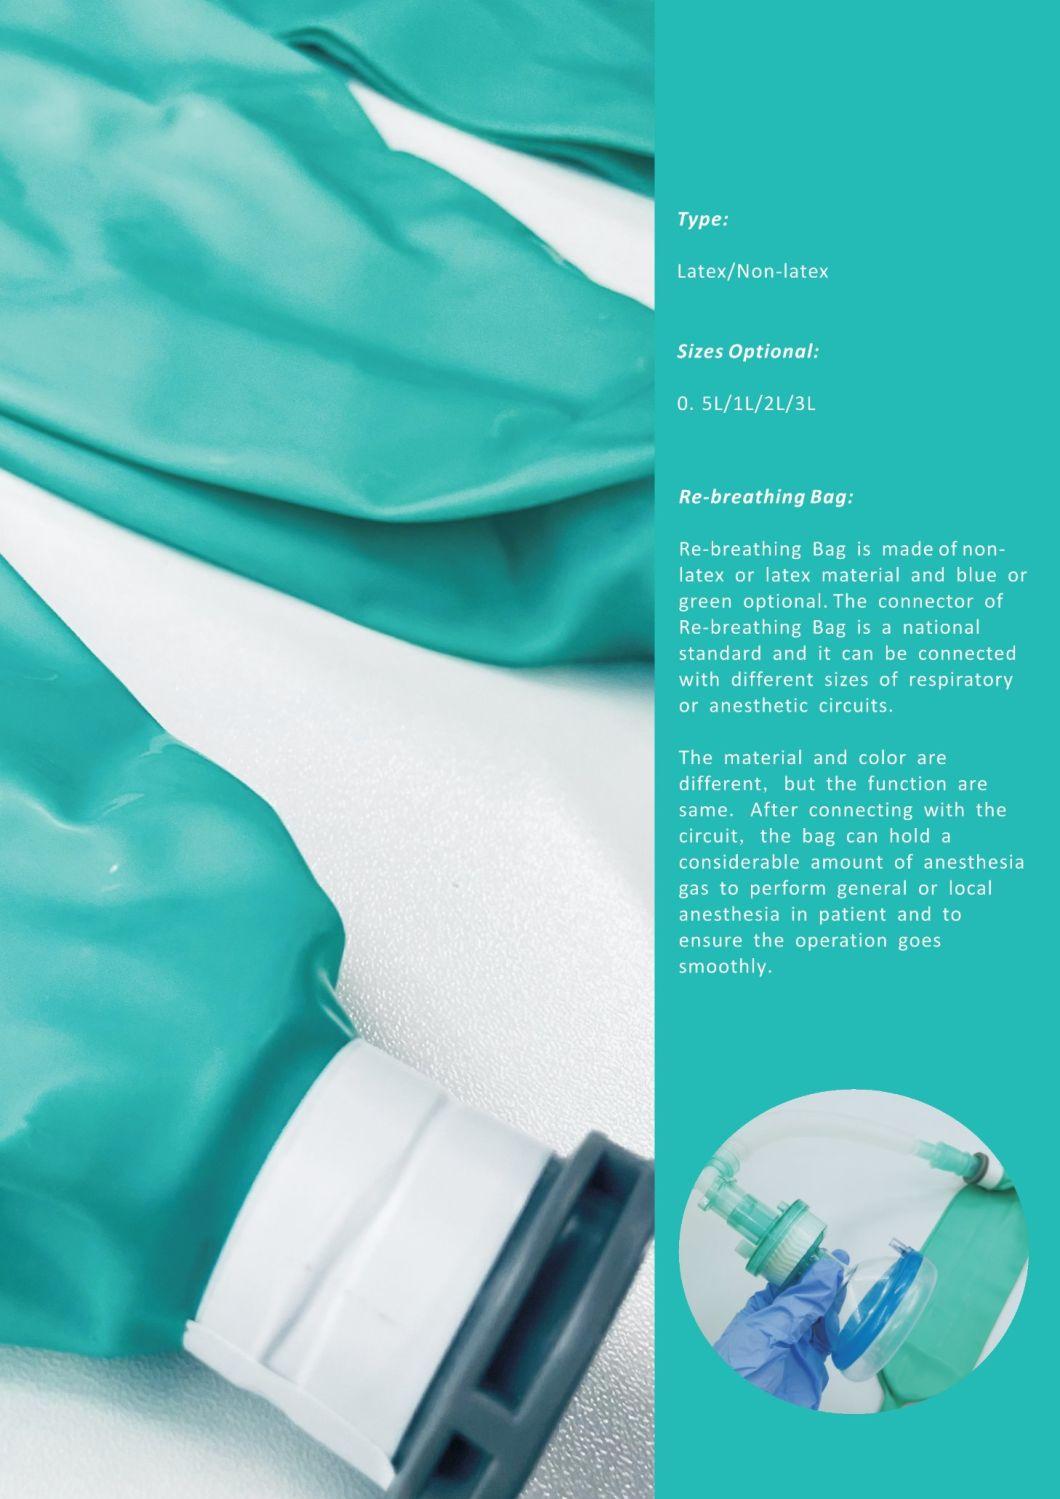 Latex Anesthesia Gas Bag of Respiratory Circuit with Mask